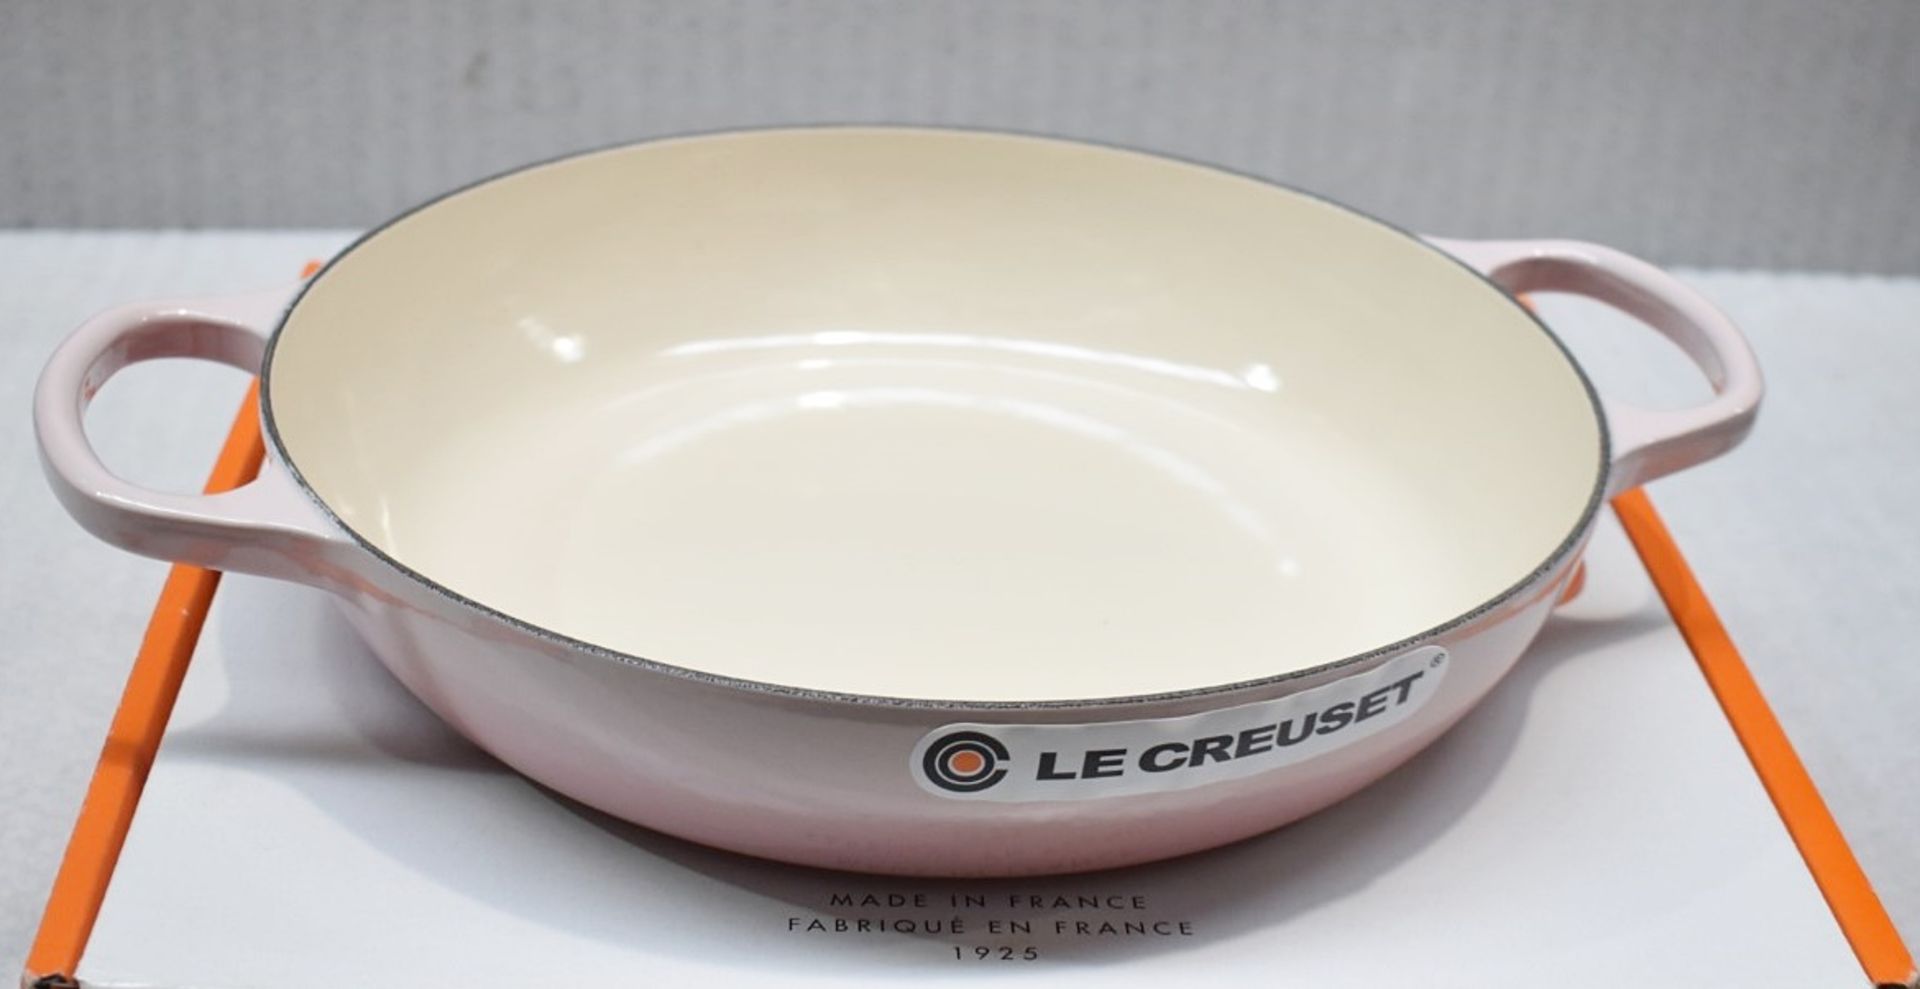 1 x LE CREUSET Signature Shallow Cast Iron Casserole Dish, Shell Pink 30cm - Original Price £285.00 - Image 7 of 8